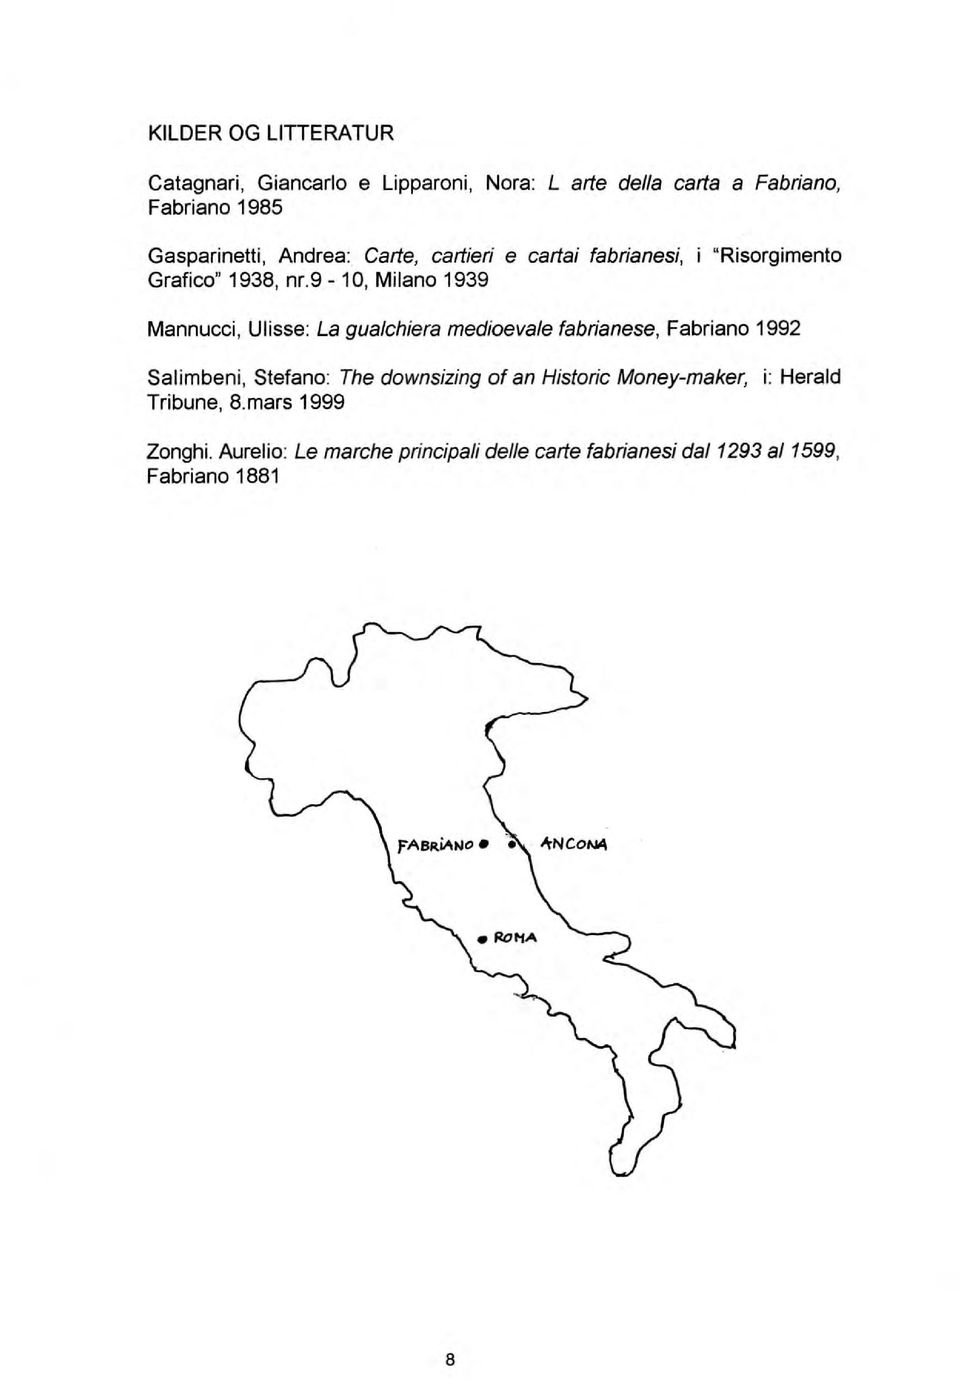 9-10, Milano 1939 "Risorgimento Mannucci, Ulisse: La gualehiera medioevale fabrianese, Fabriano 1992 Salimbeni,